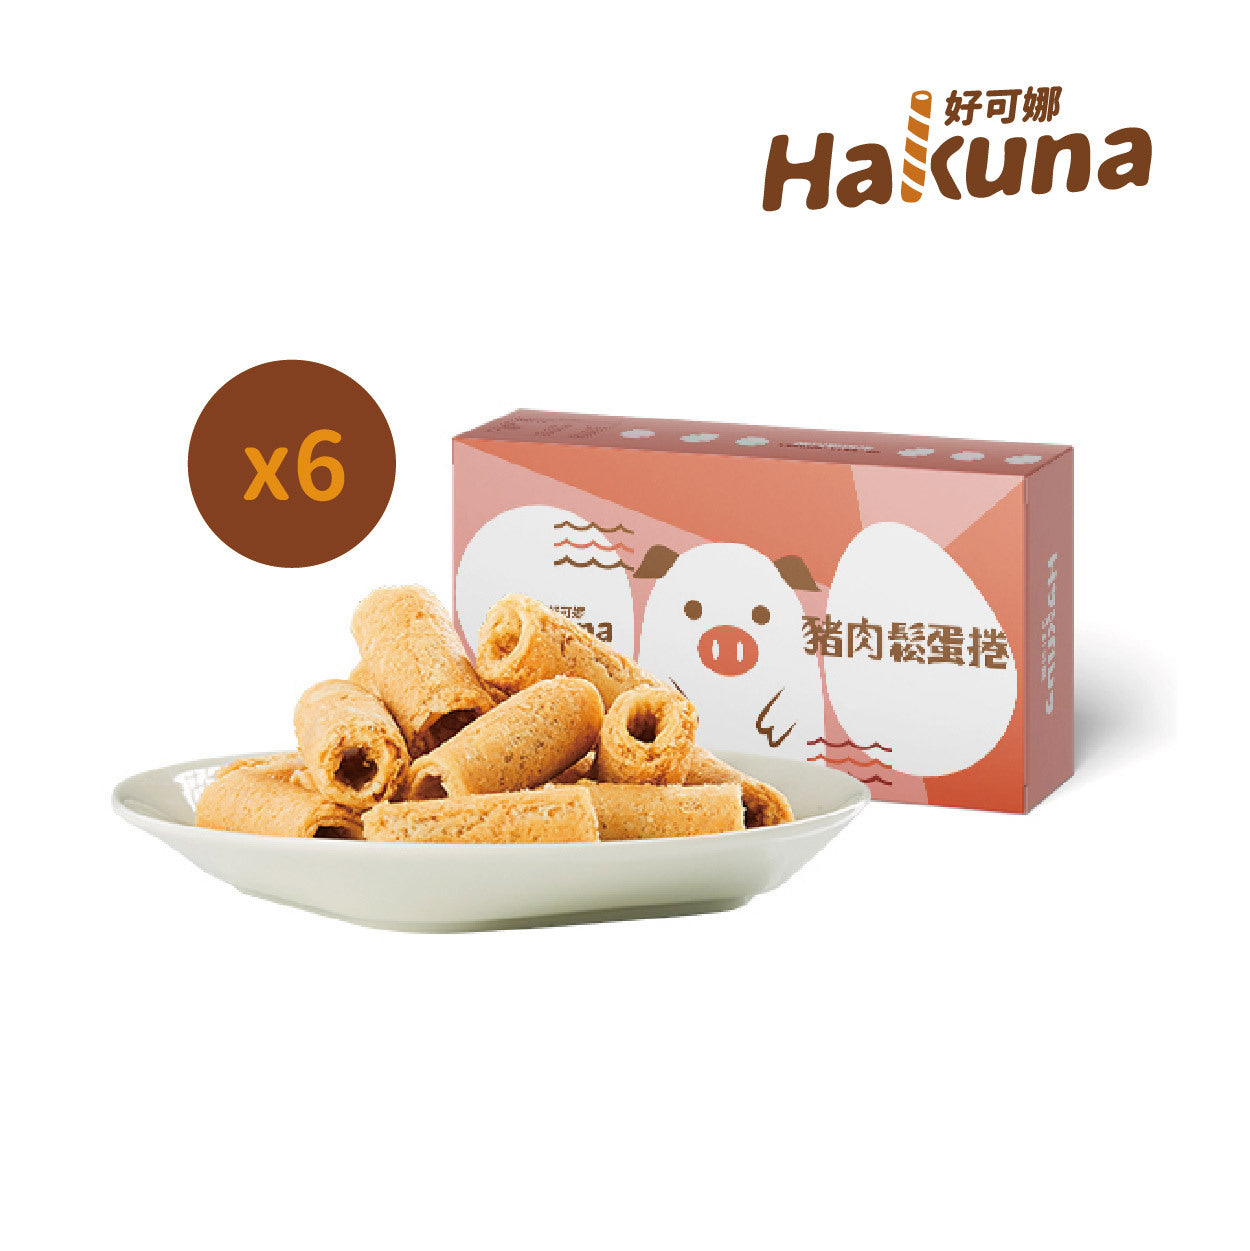 【Hakuna】Pork floss egg rolls 6 boxes (9 small pieces/box)